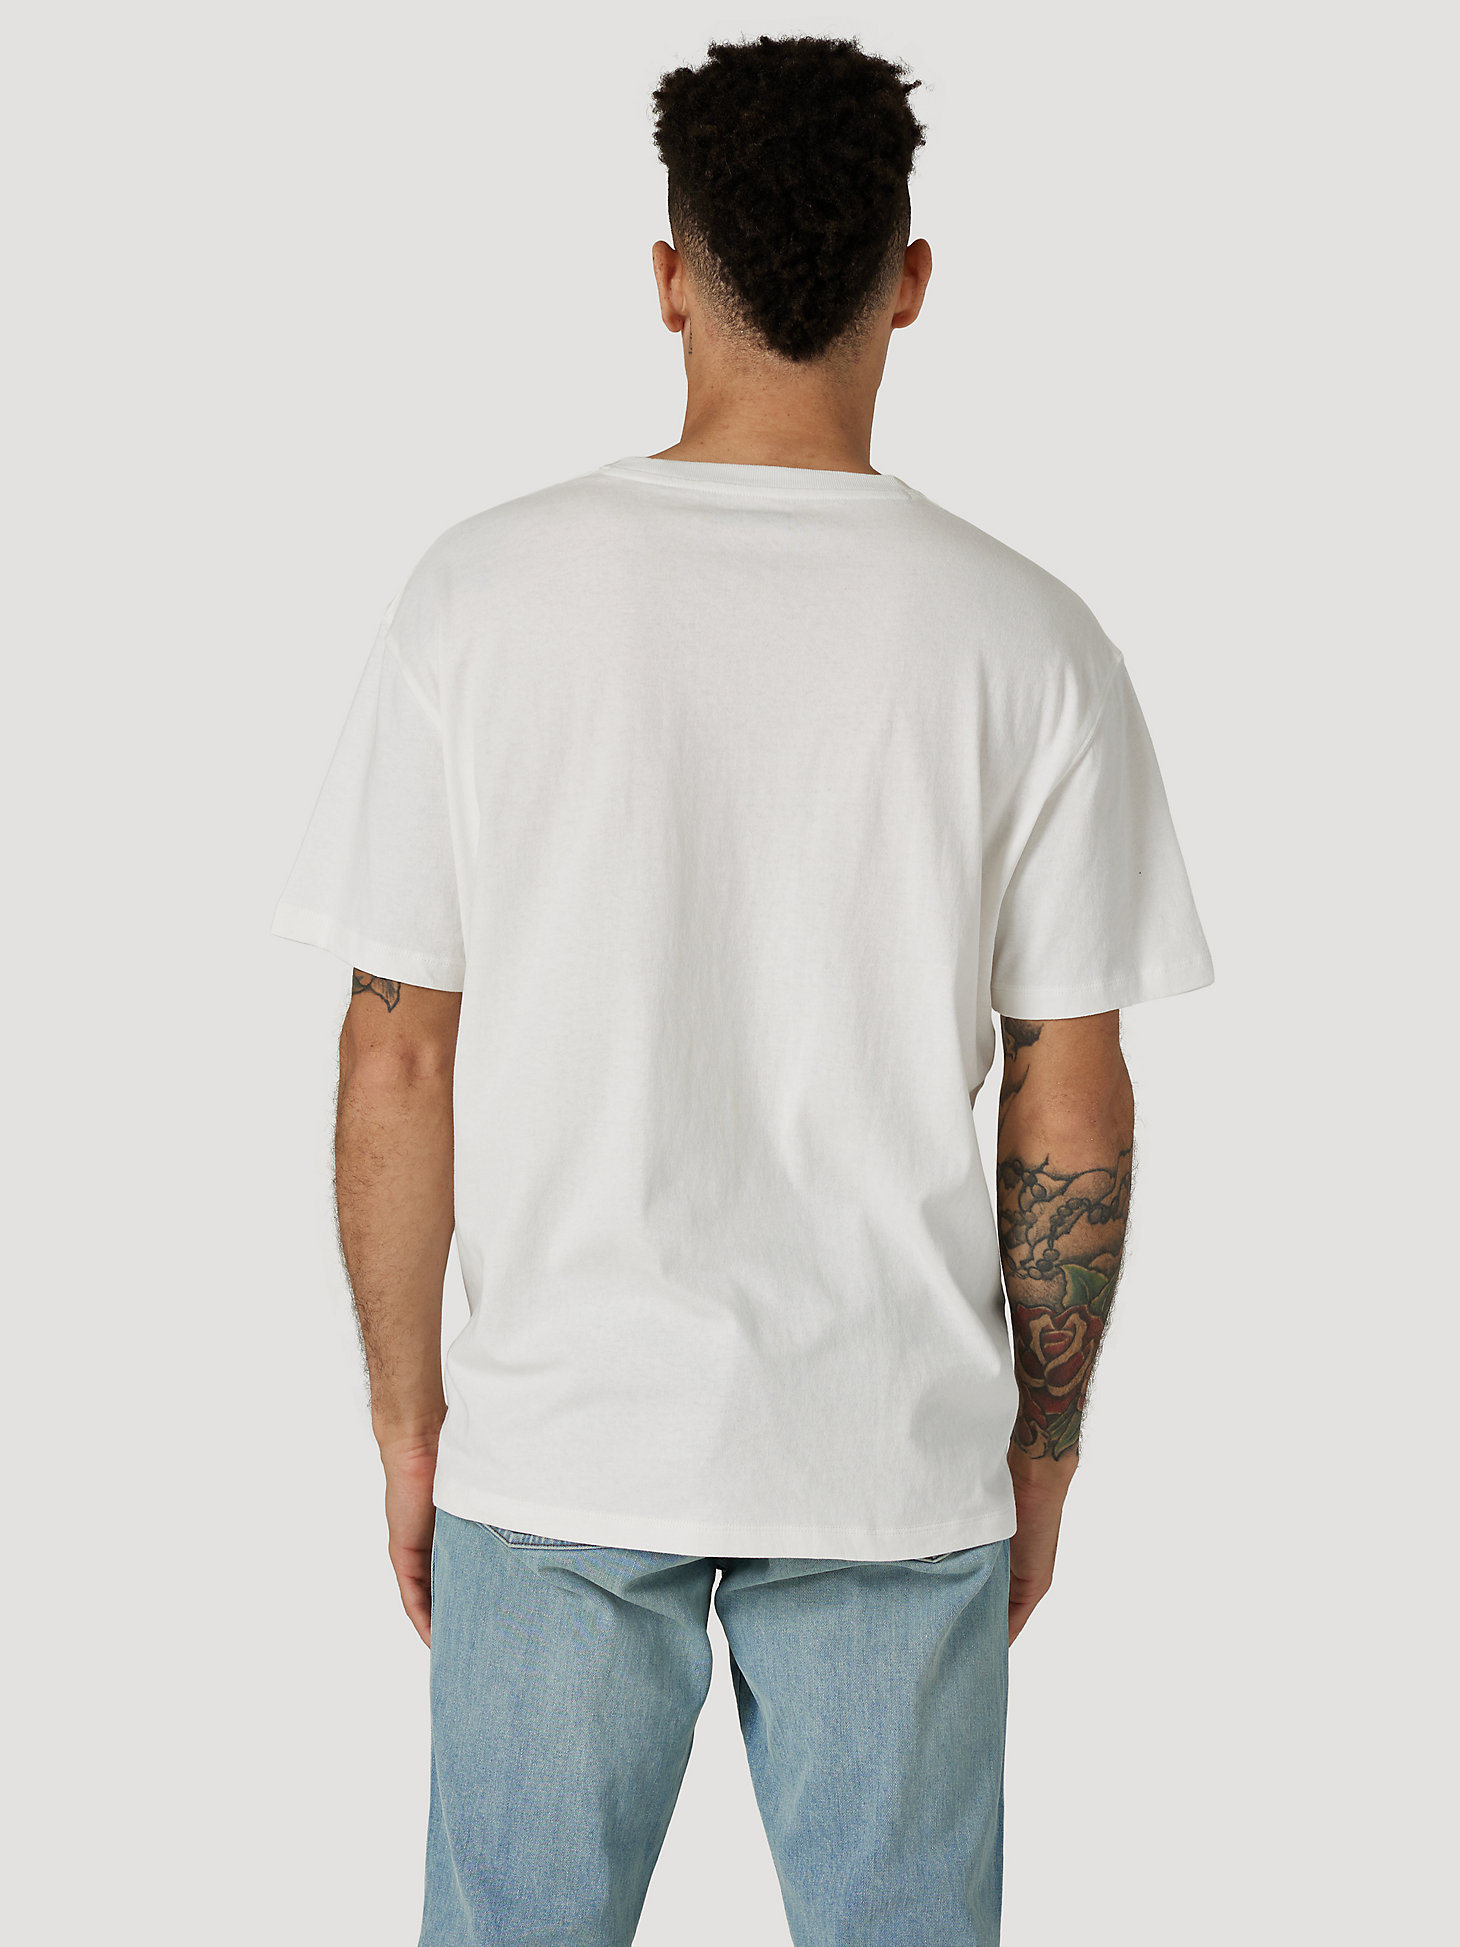 Wrangler x Fender Dancing Record T-Shirt in Worn White alternative view 2